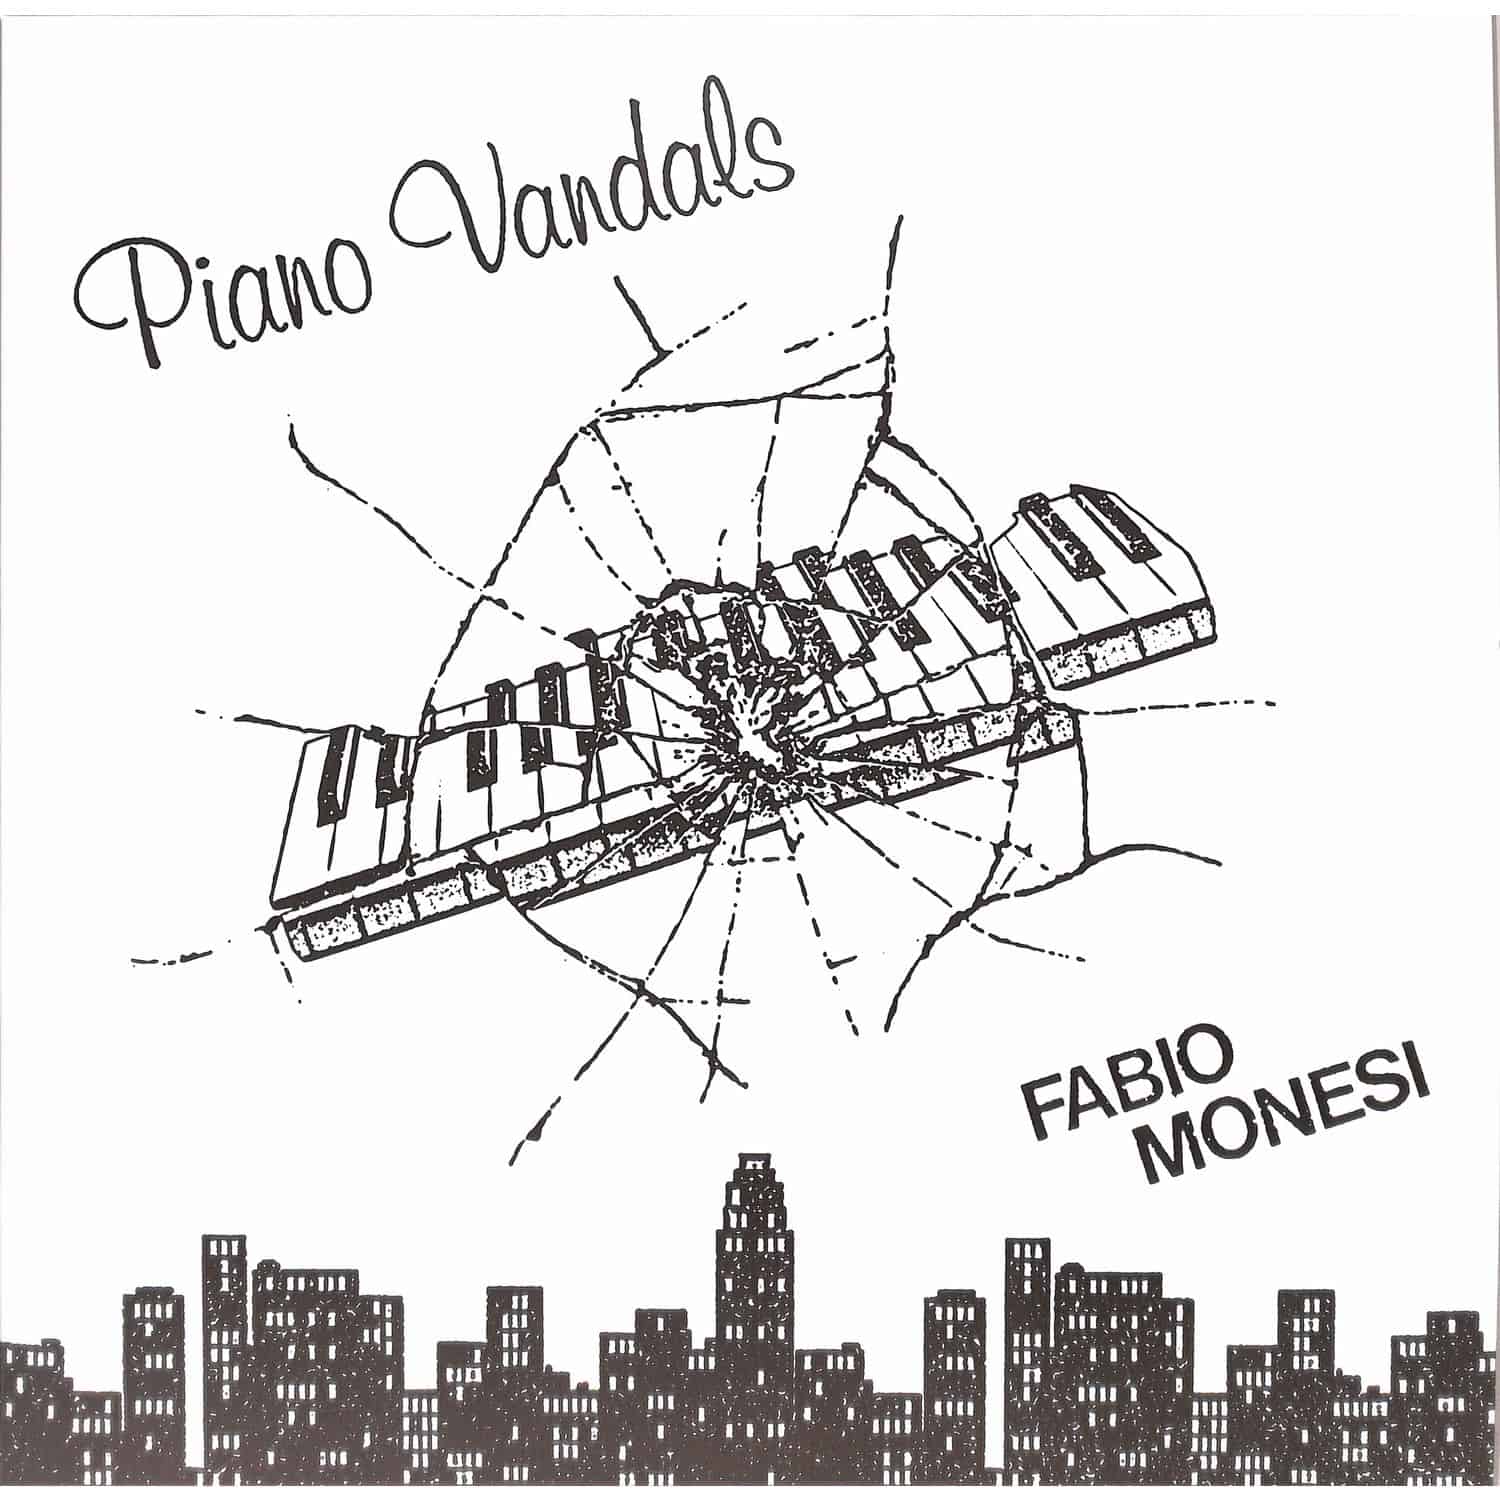 Fabio Monesi - PIANO VANDALS 